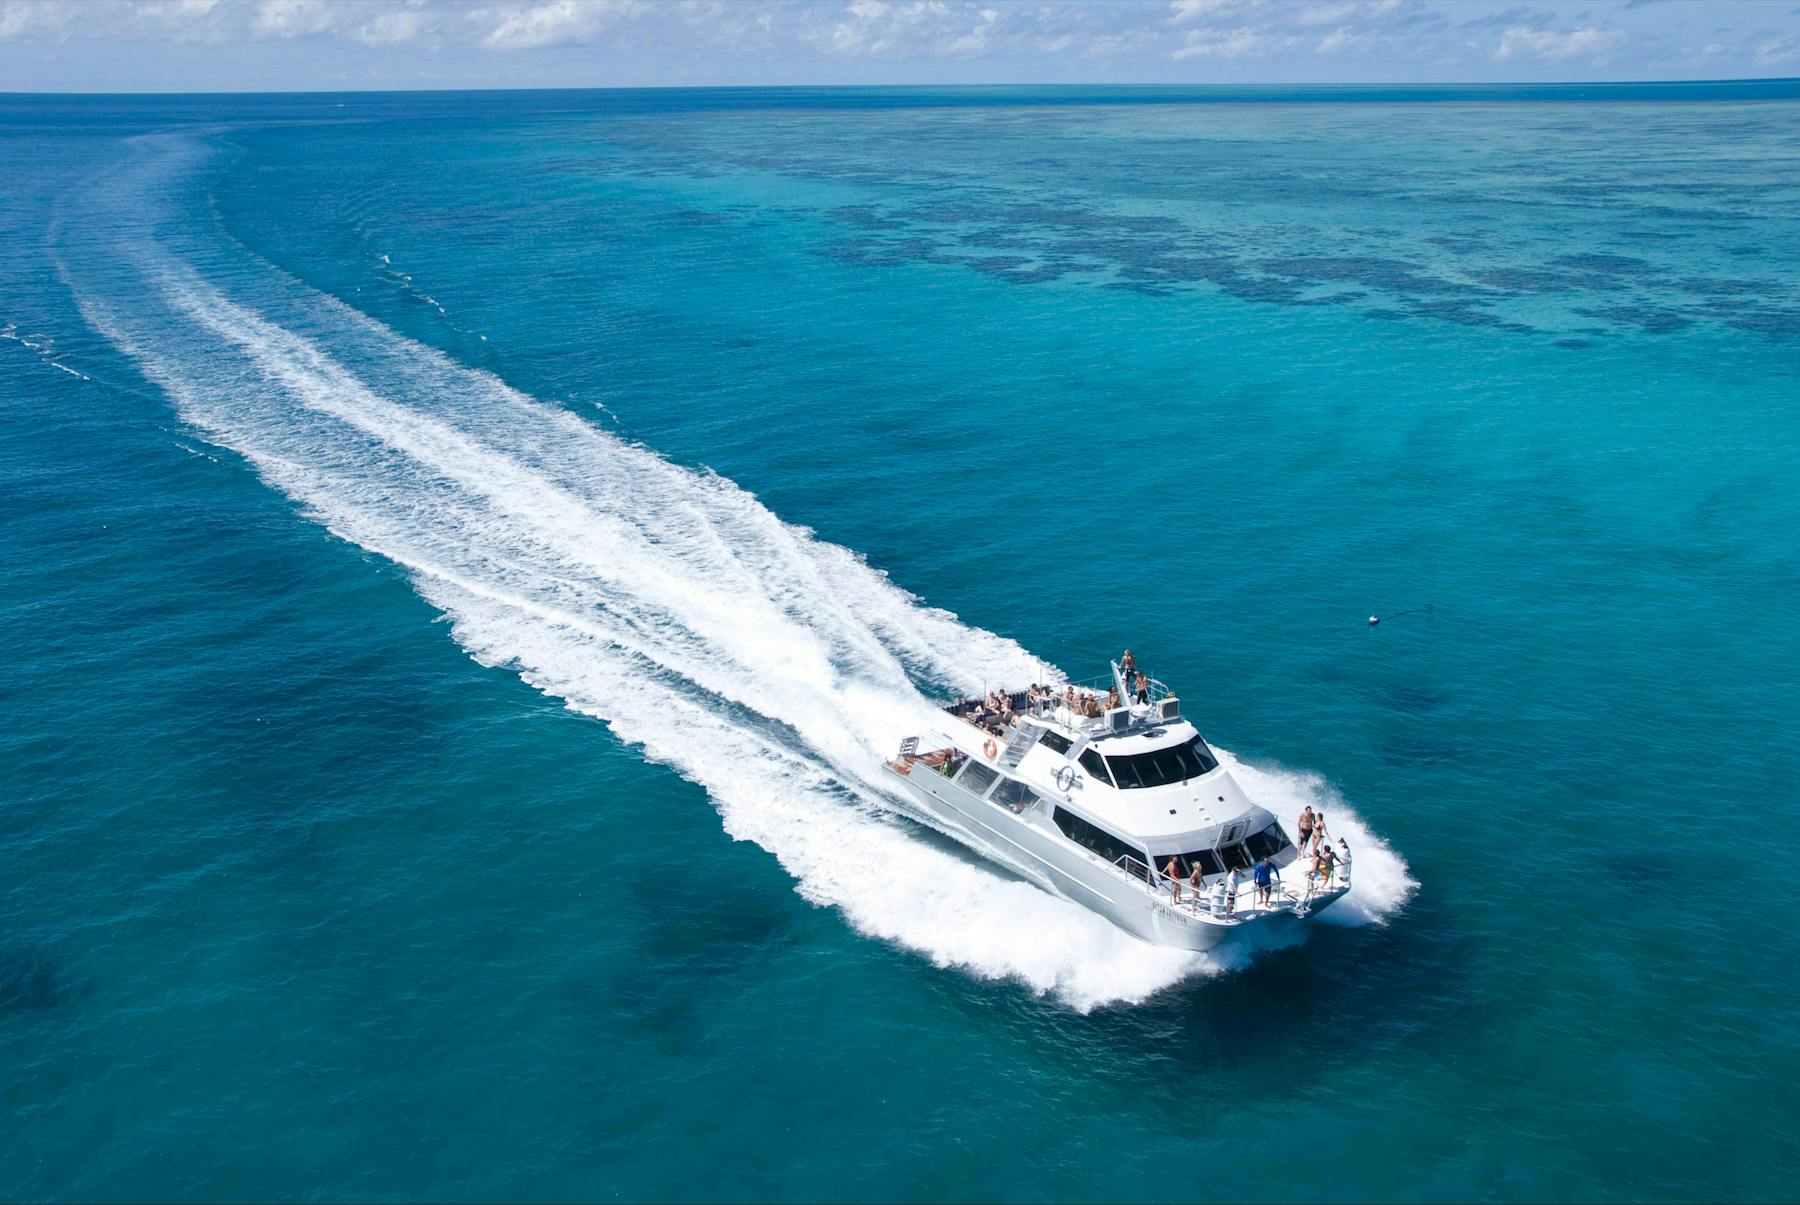 Ocean Freedom - Fast 20M Motor Catamaran - minimal travel time to Great Barrier Reef in Cairns